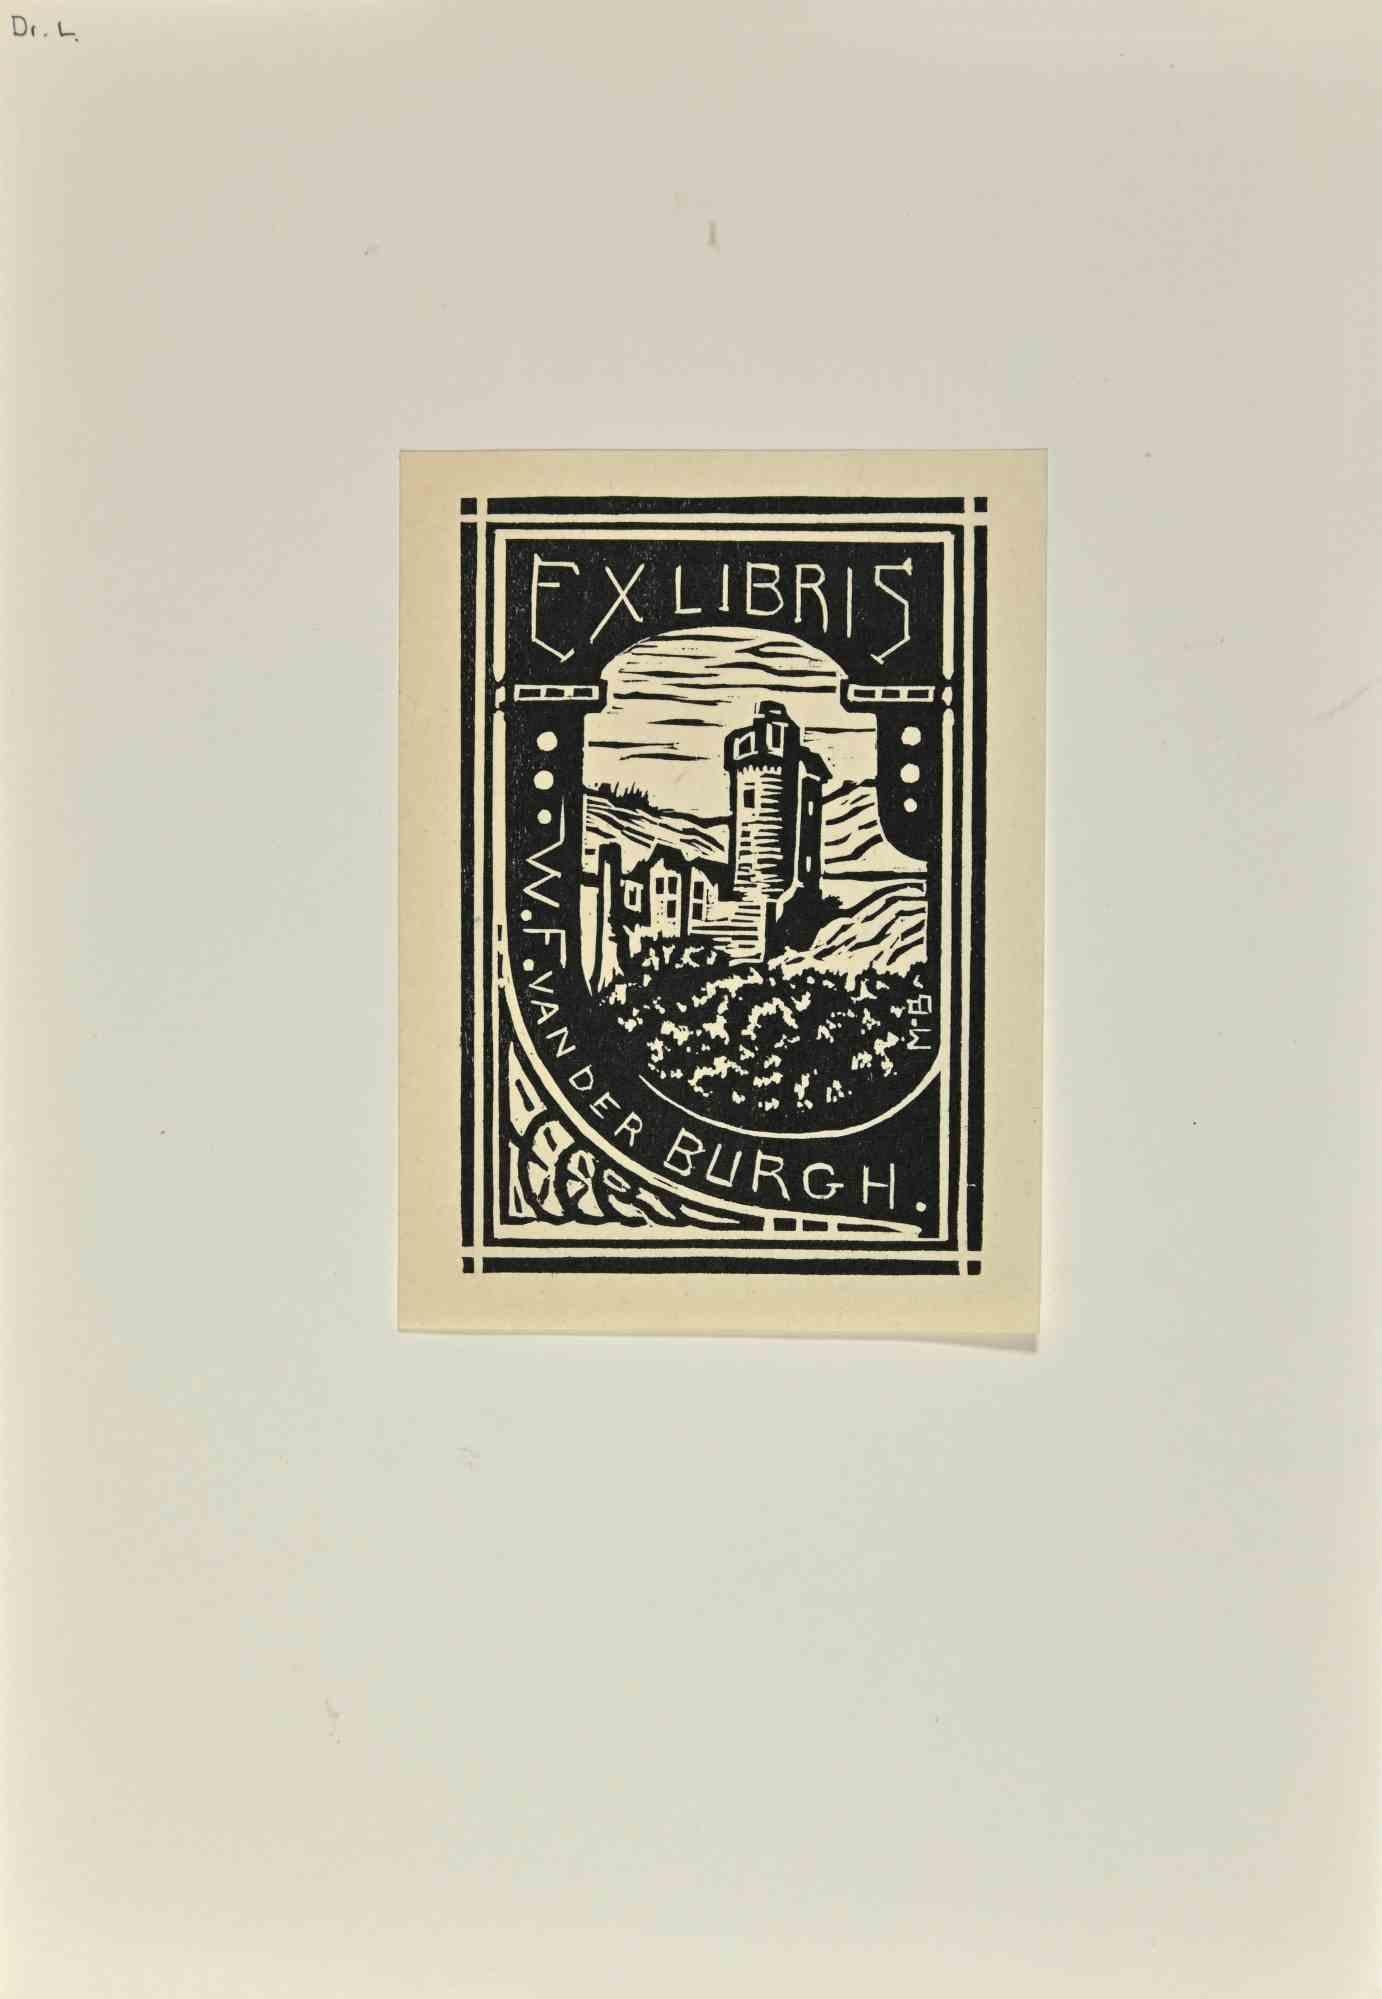  Ex Libris -Vander Burgh - Woodcut - Mid 20th Century - Art by Unknown